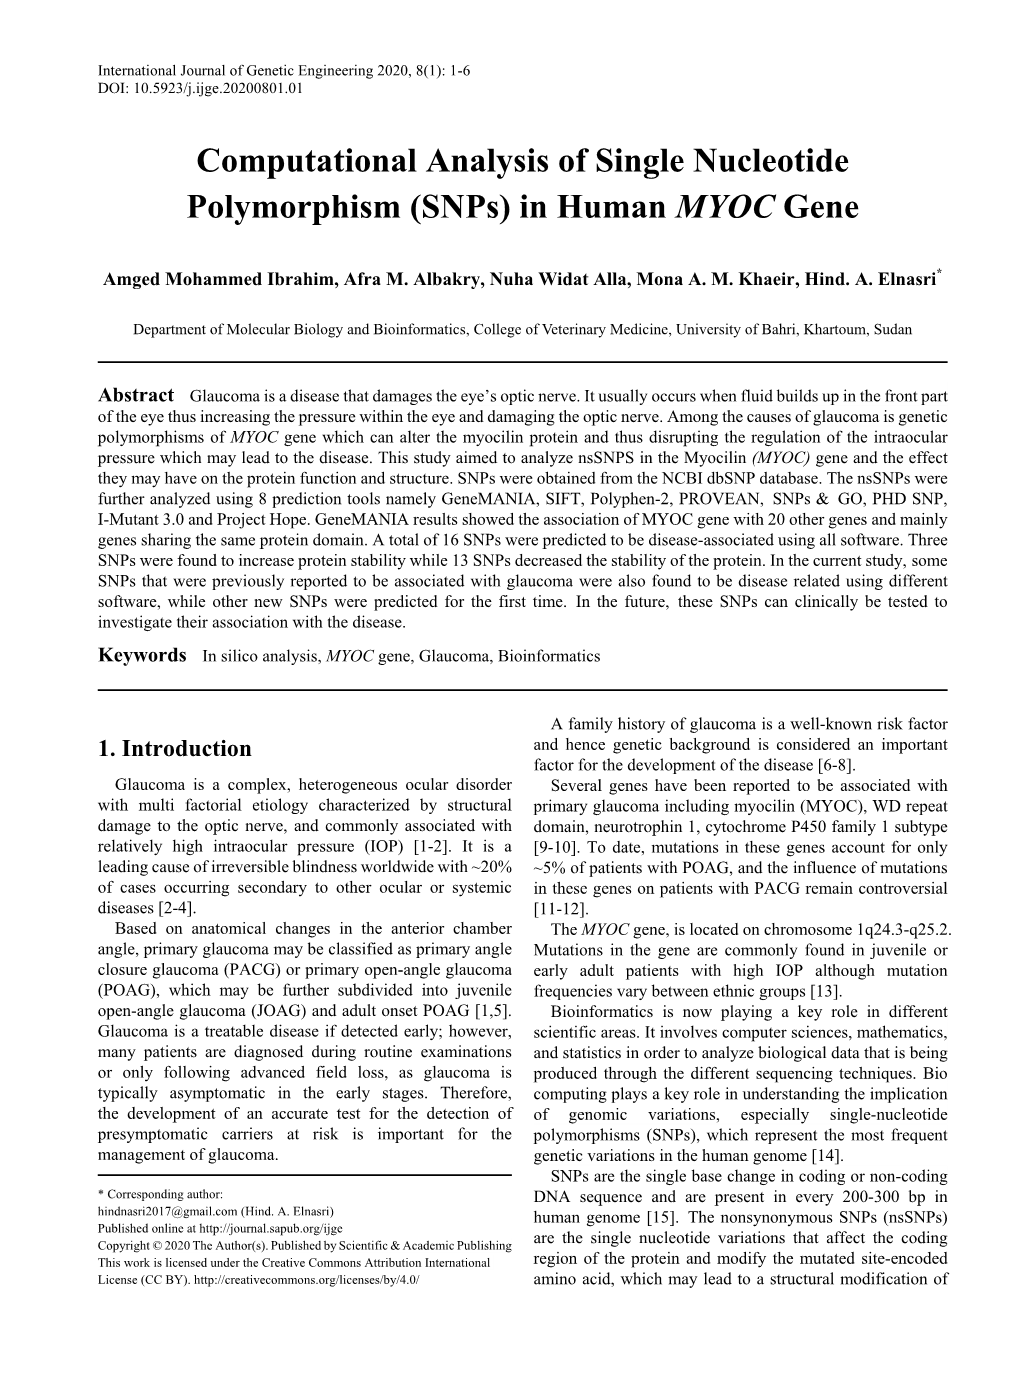 Computational Analysis of Single Nucleotide Polymorphism (Snps) in Human MYOC Gene